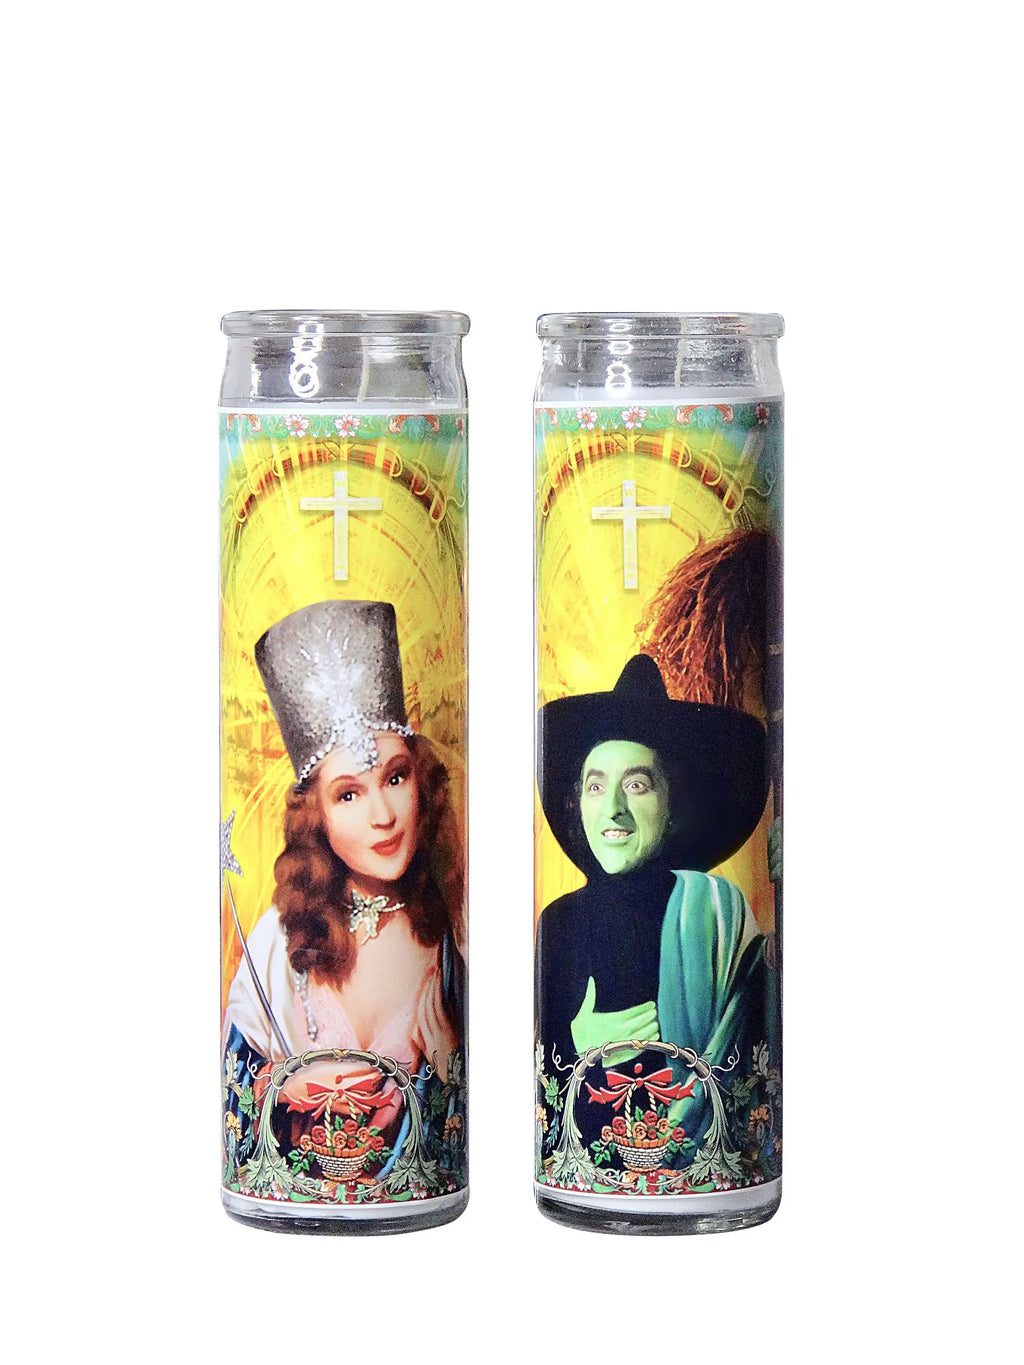 Glinda And Elphaba Celebrity Prayer Candle Set - Wizard Of Oz